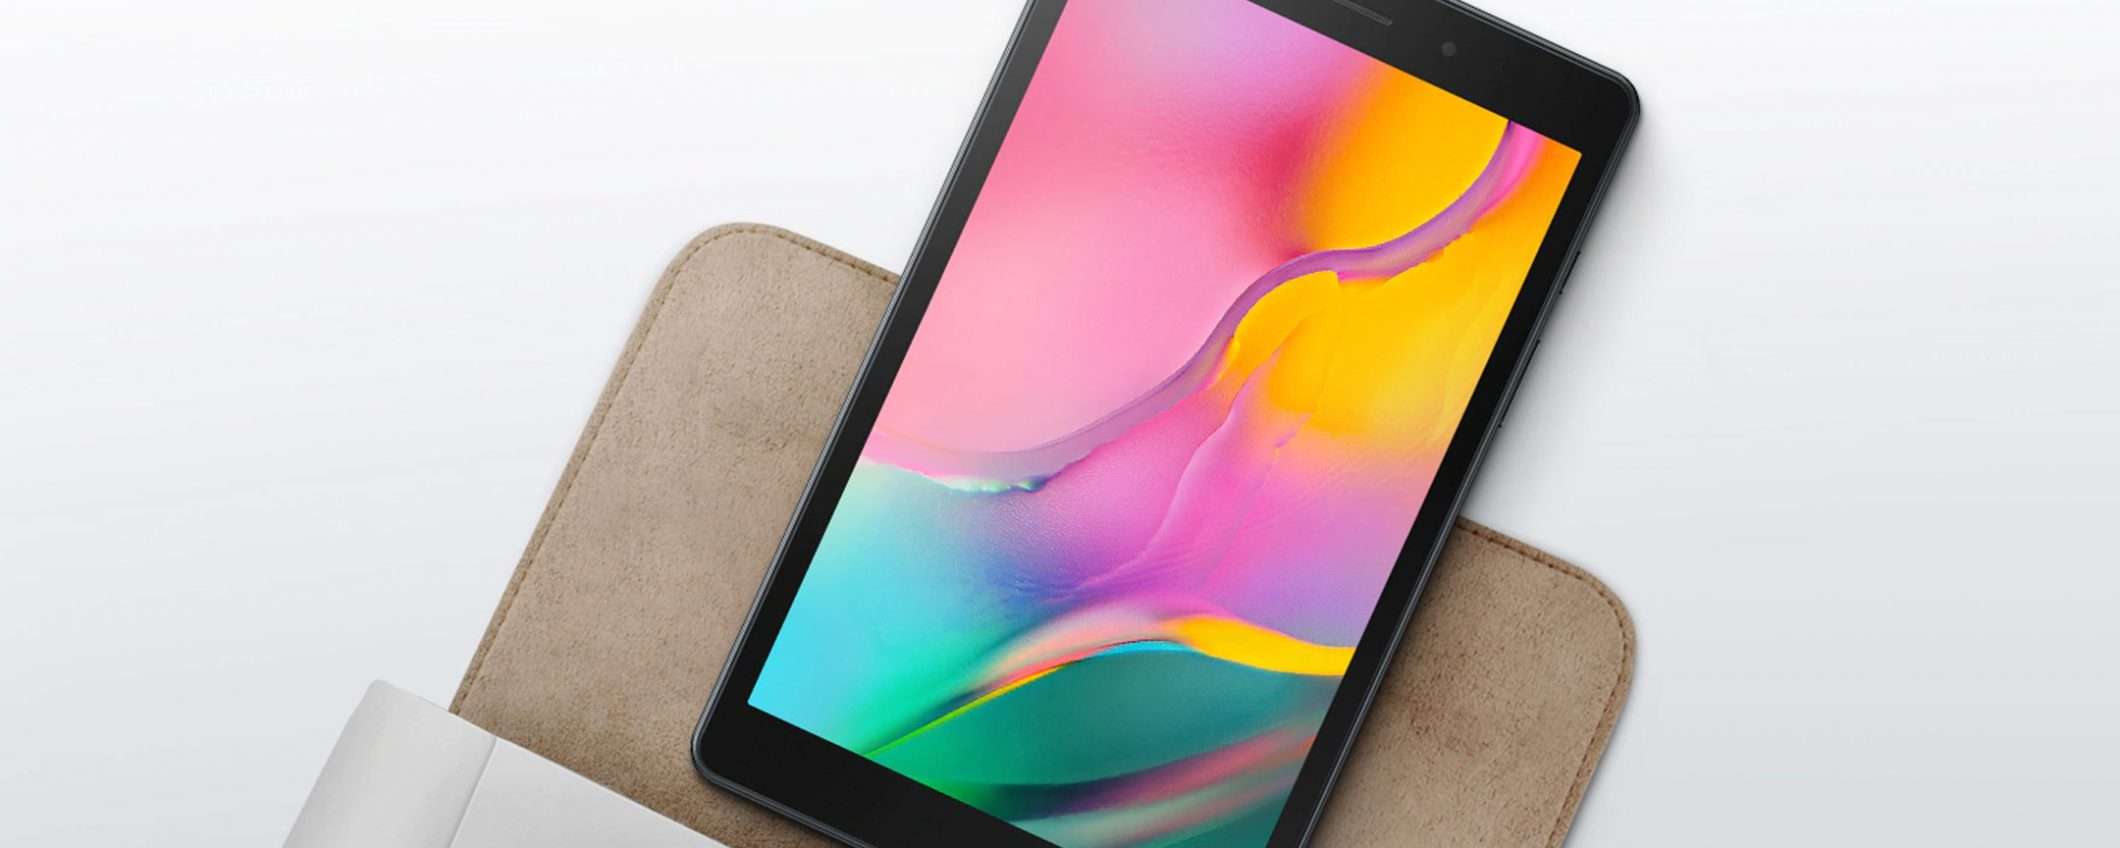 Samsung Galaxy Tab A: il tablet in sconto su eBay